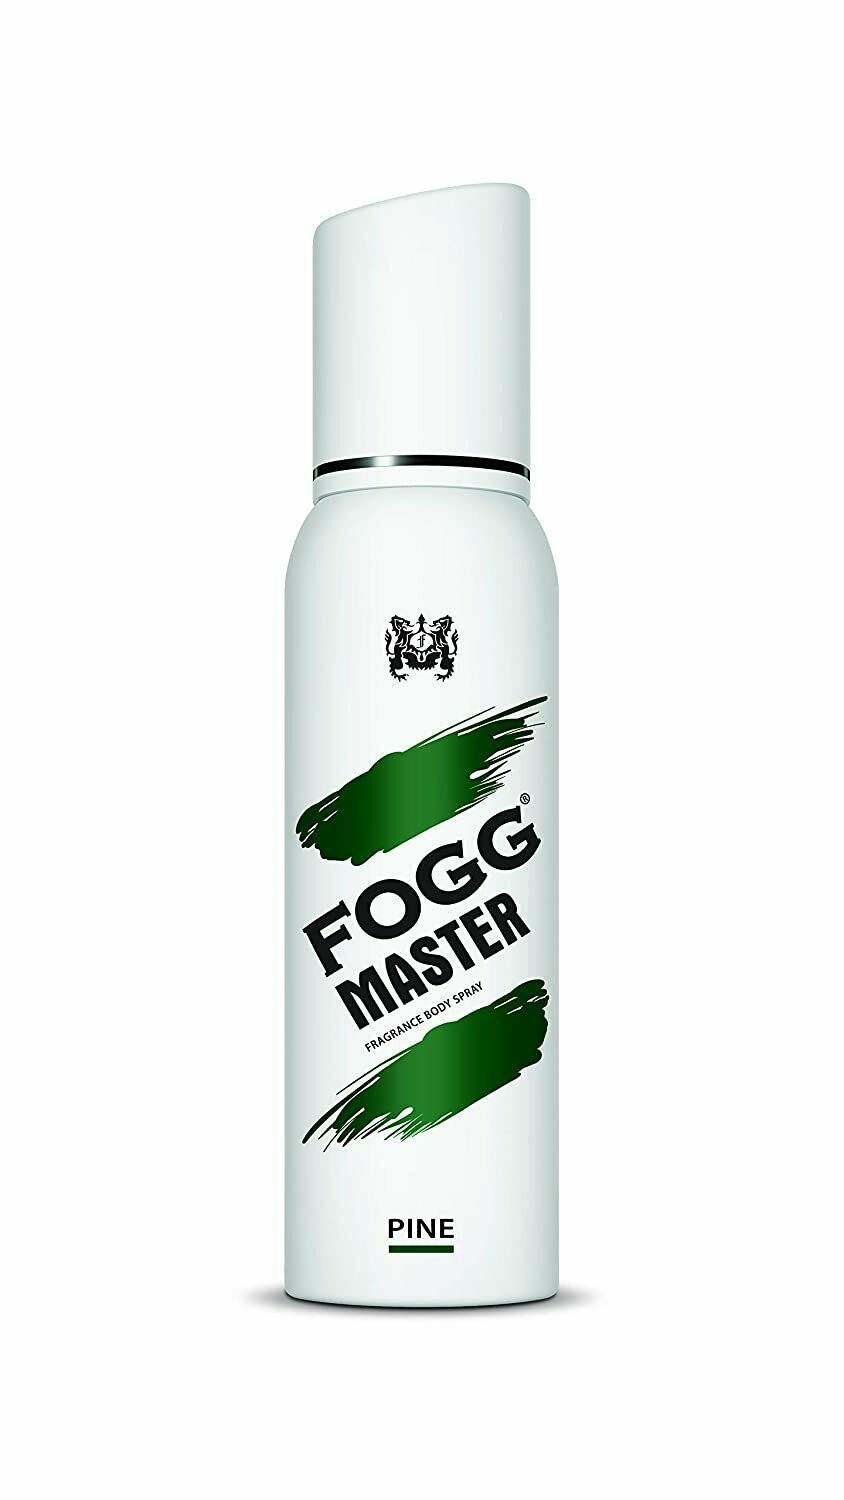 Fogg Master Pine Deodorant Spray 150 Ml - Made In India